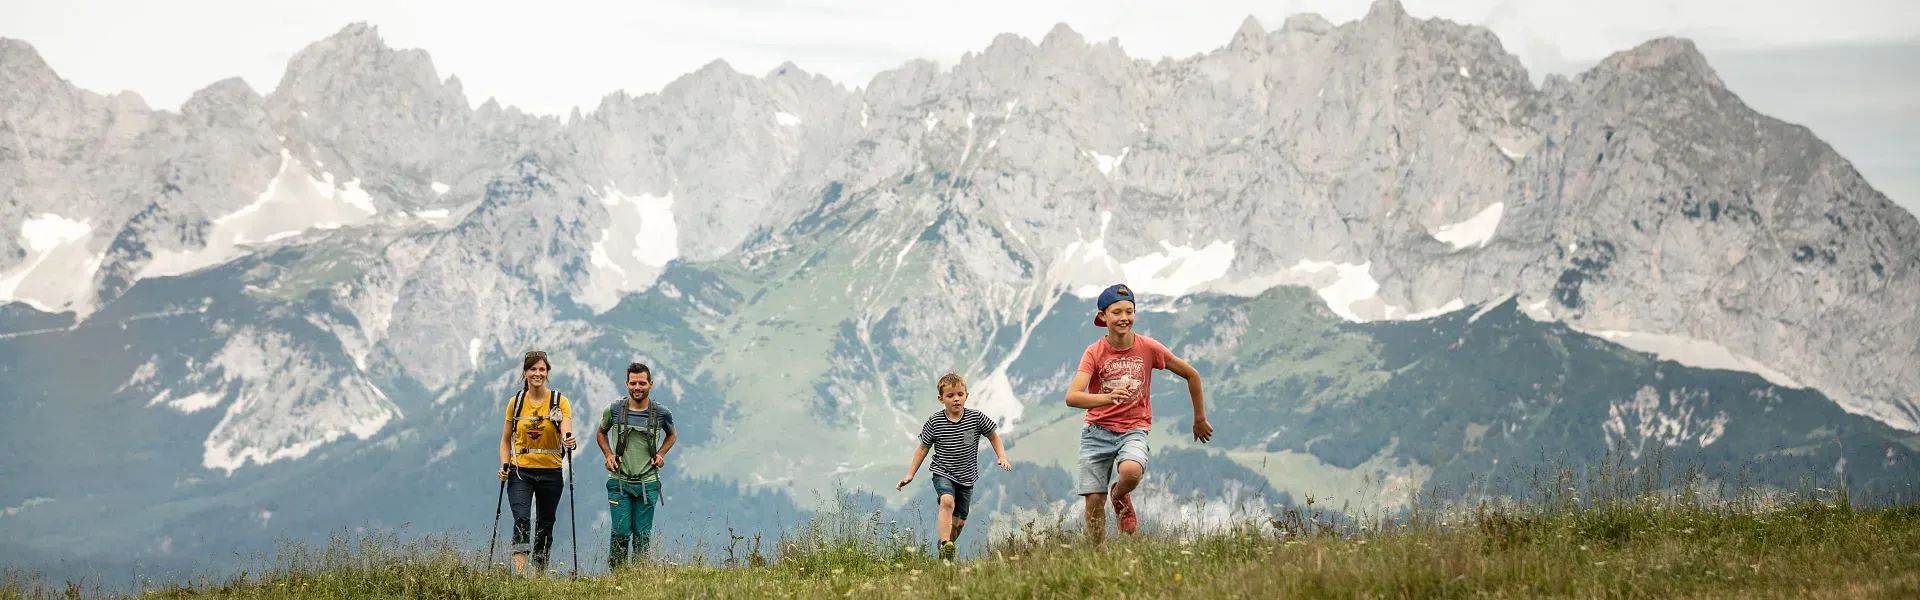 Familie beim wandern - Region St. Johann in Tirol